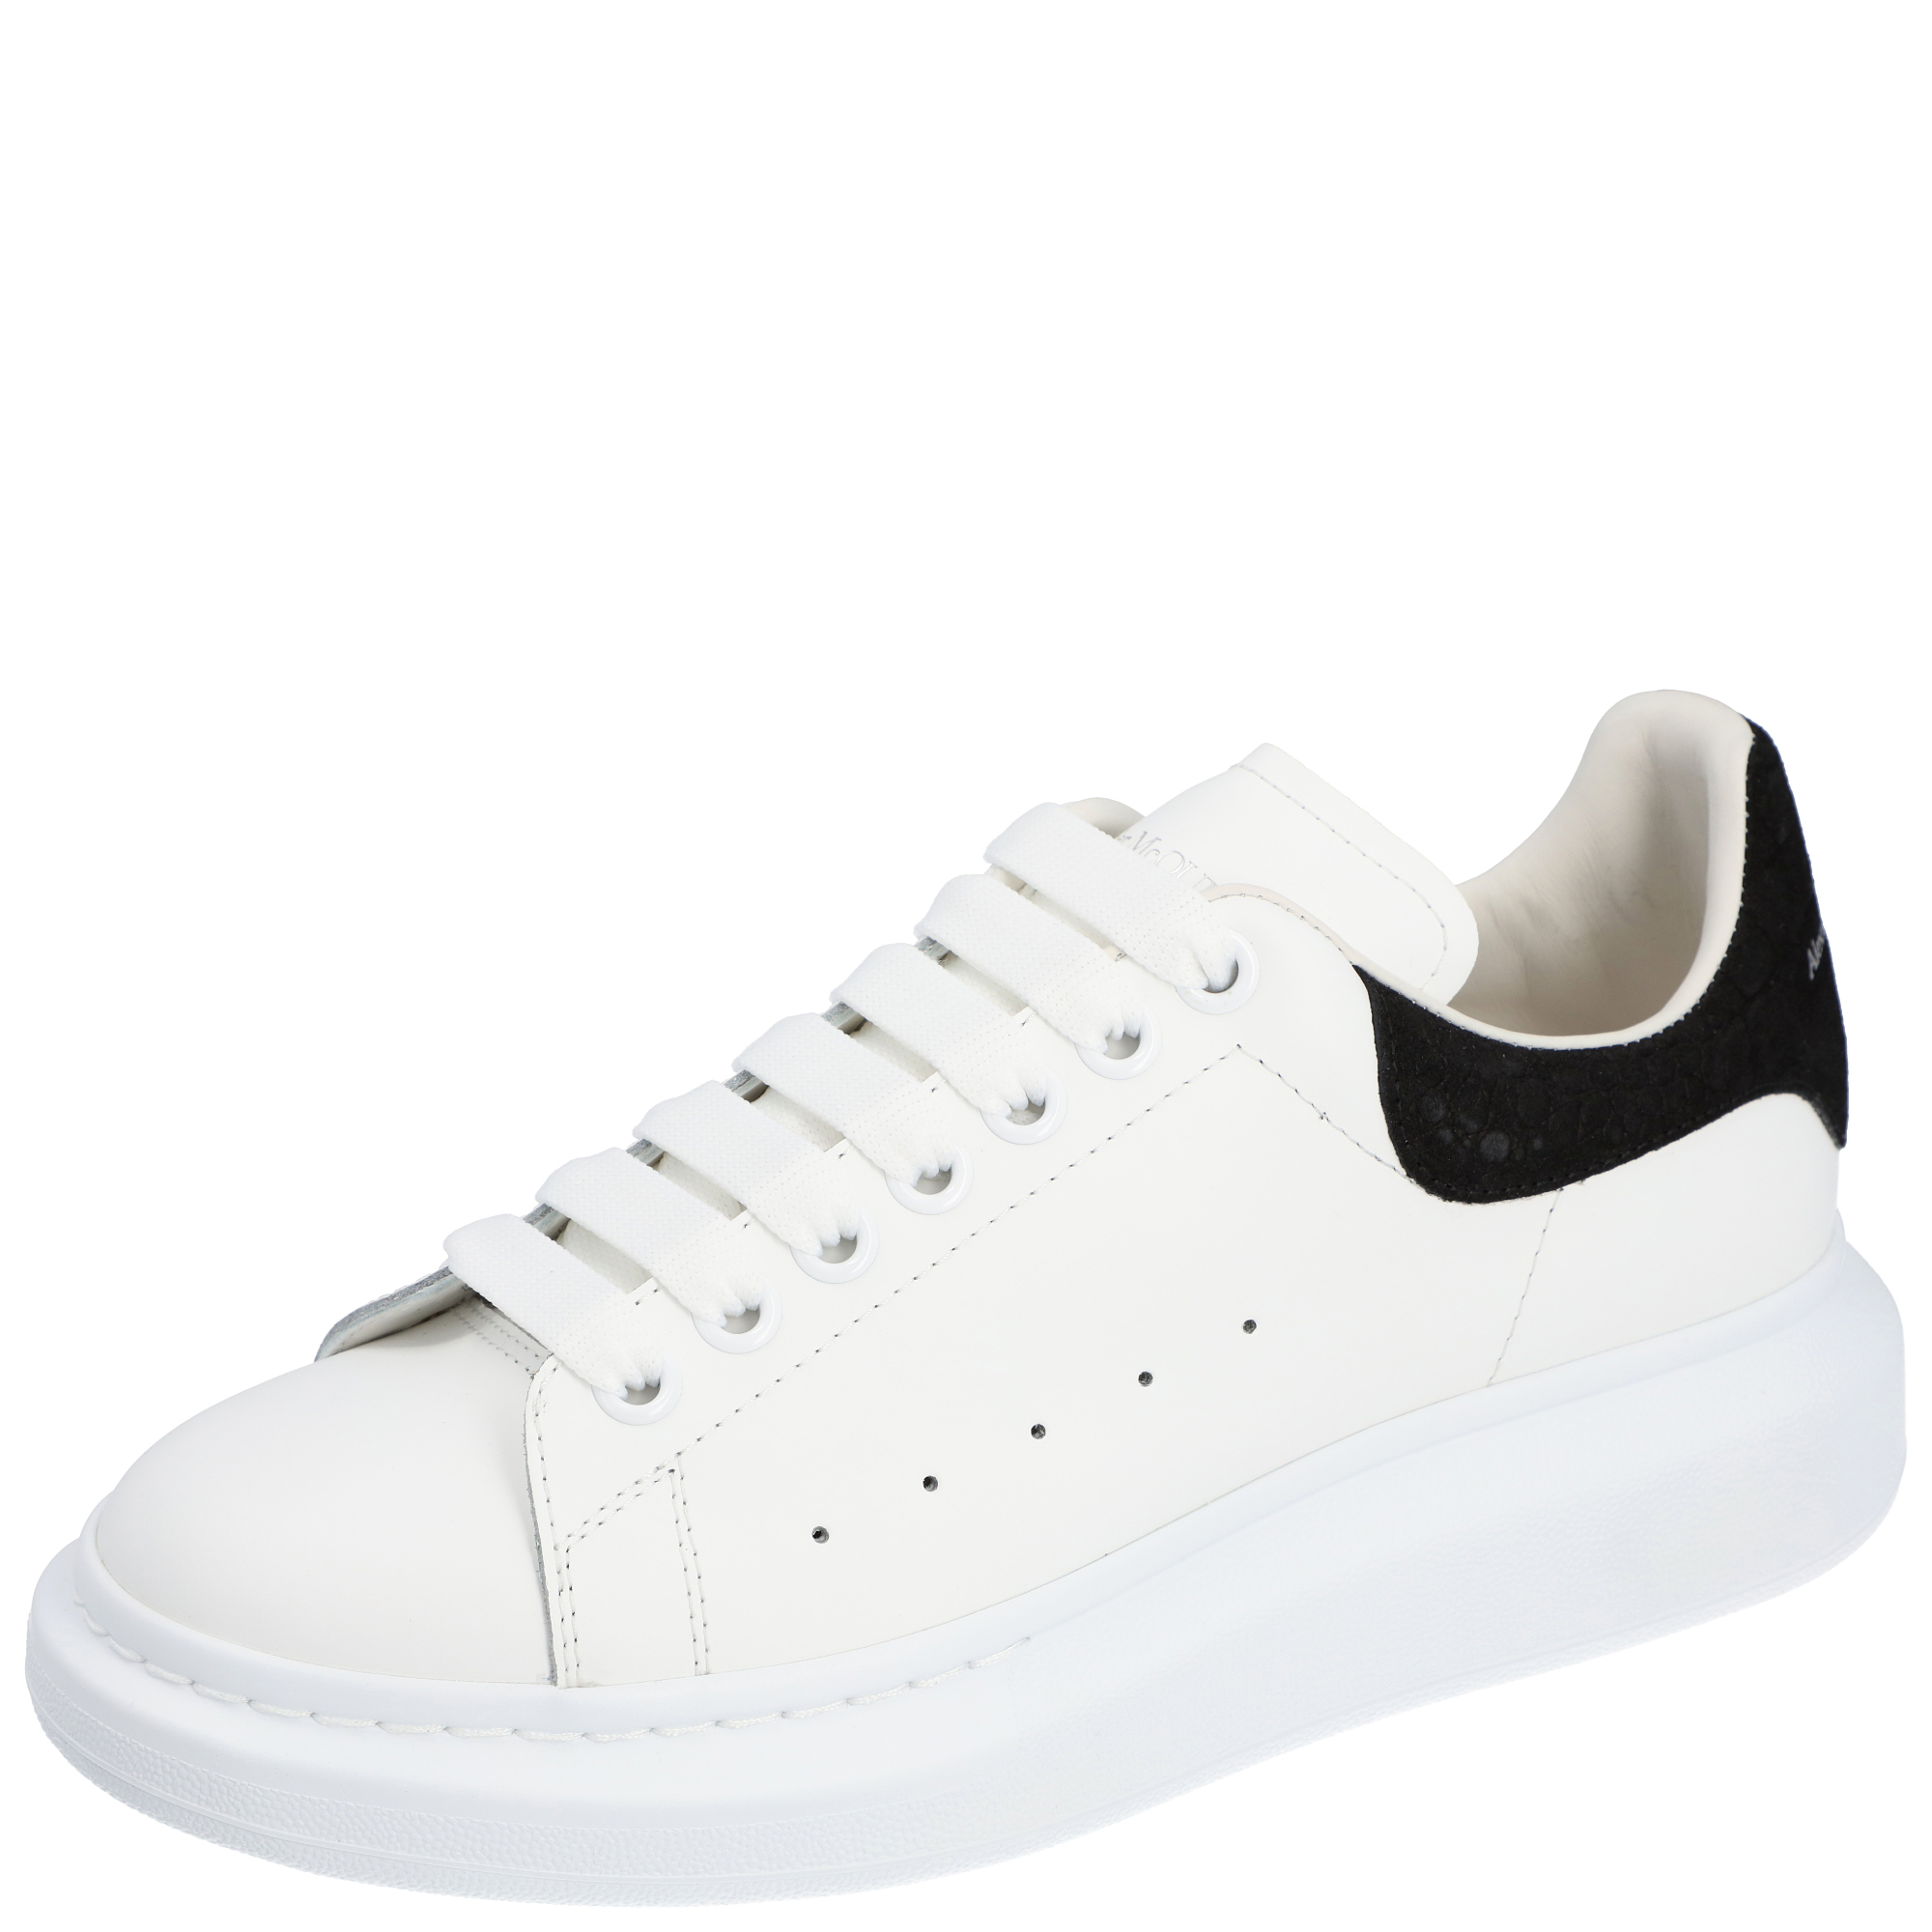 Alexander McQueen White/Black Oversized Sneakers Size EU 40